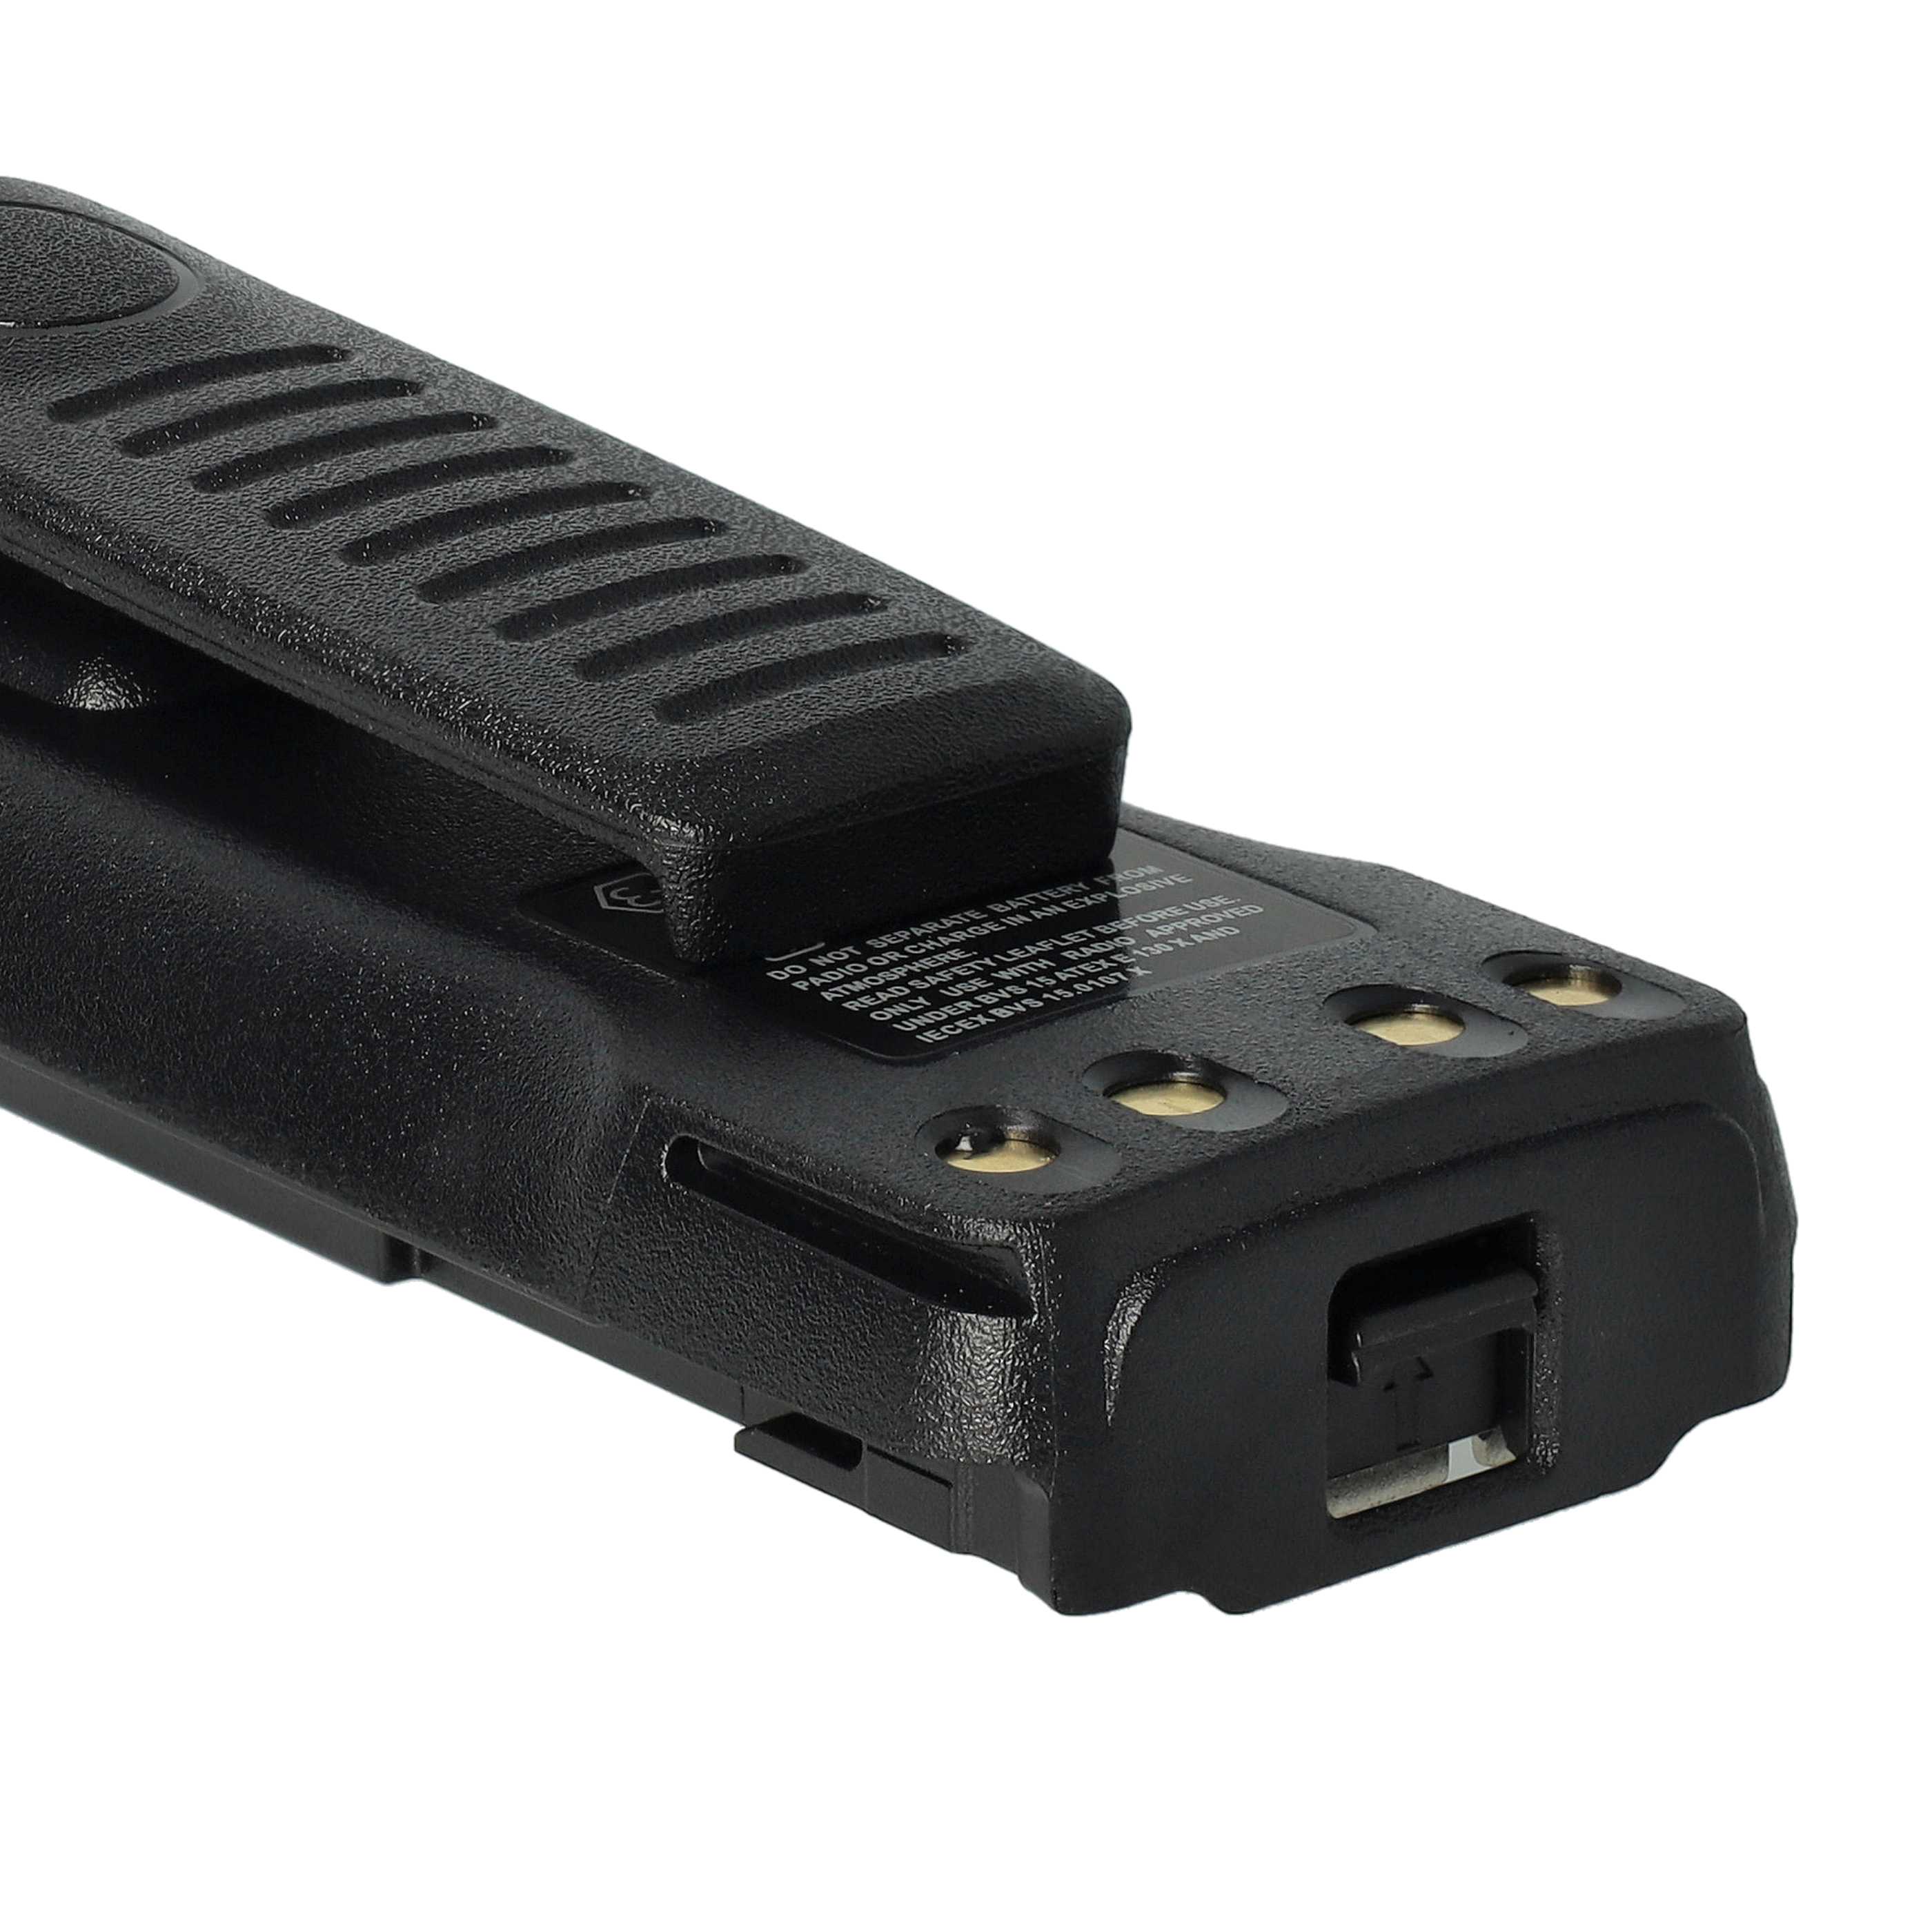 Akumulator do radiotelefonu zamiennik Motorola NNTN8570A, NNTN8570 - 1250 mAh 7,6 V Li-Ion + klips na pasek